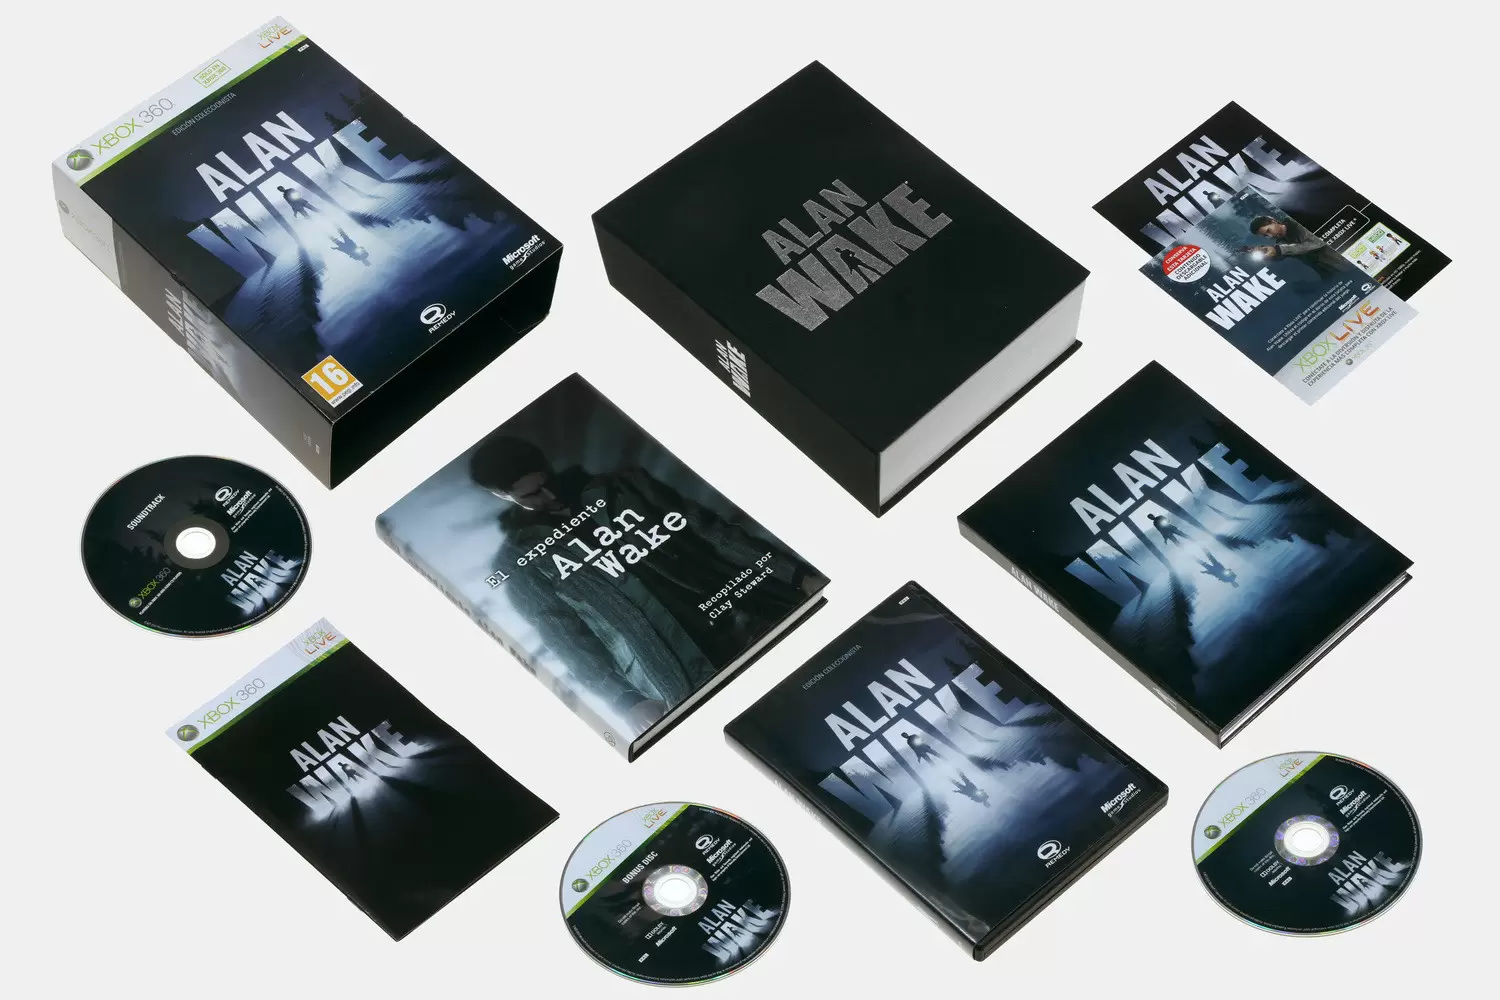 XBOX 360 Games - Alan Wake collector’s edition